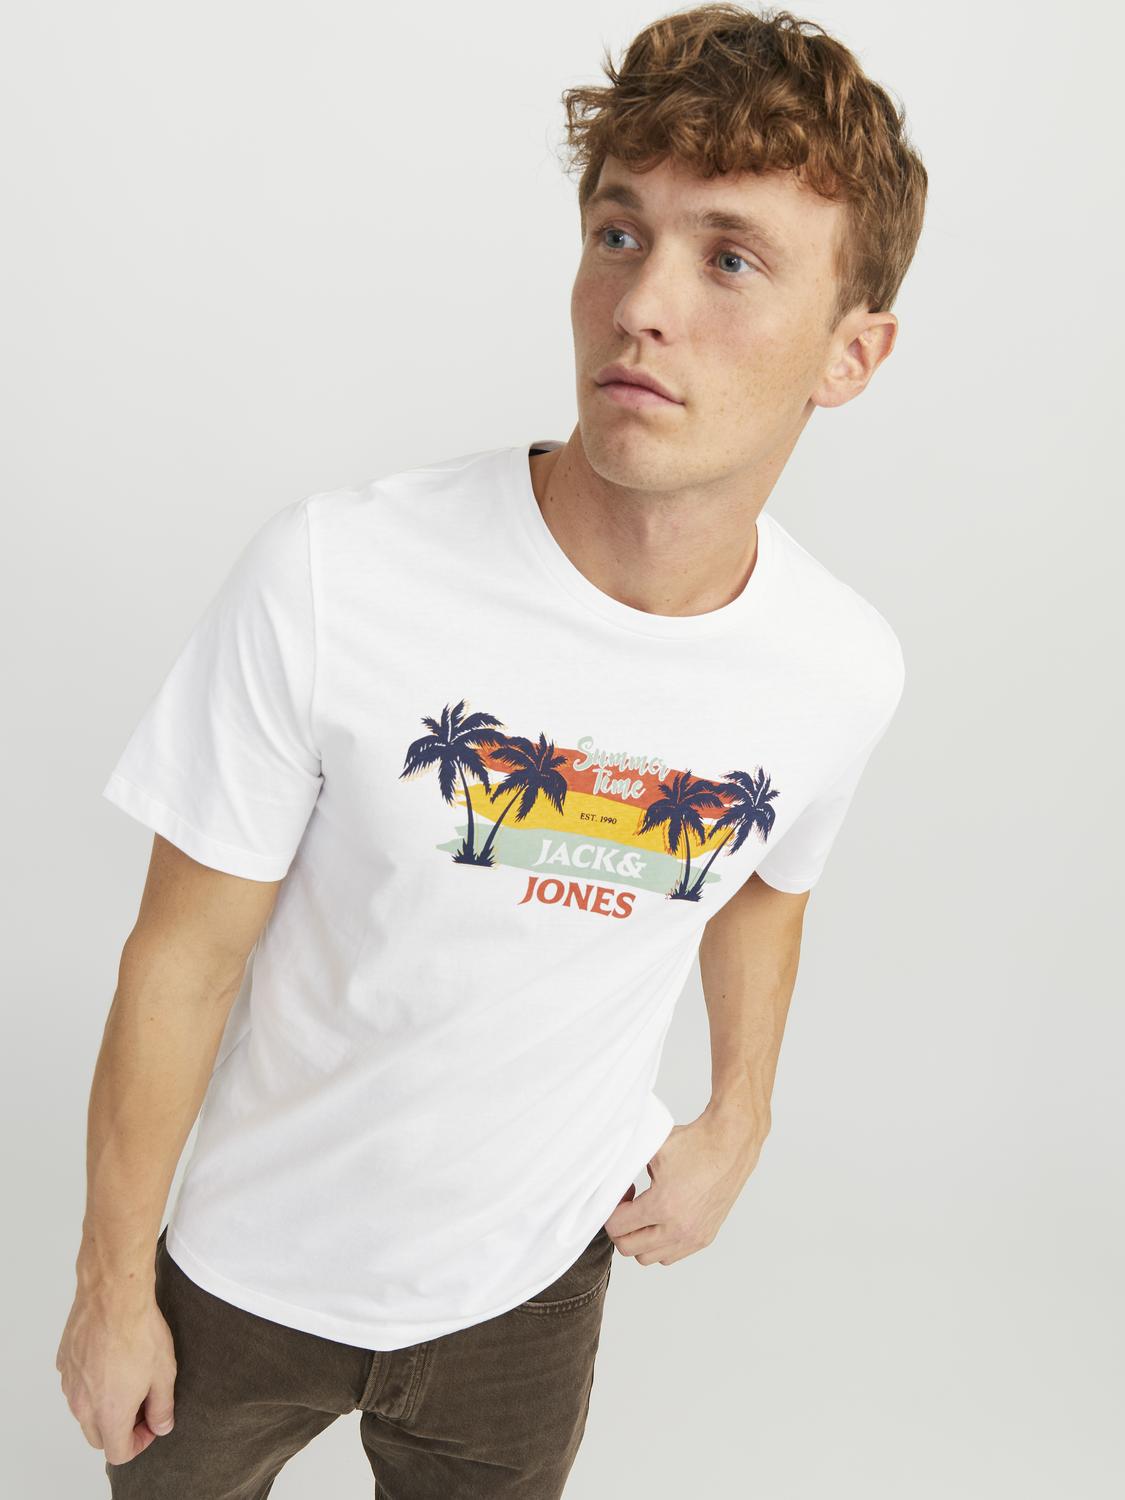 Jack & Jones Summer Vibe Tee White - Raw Menswear